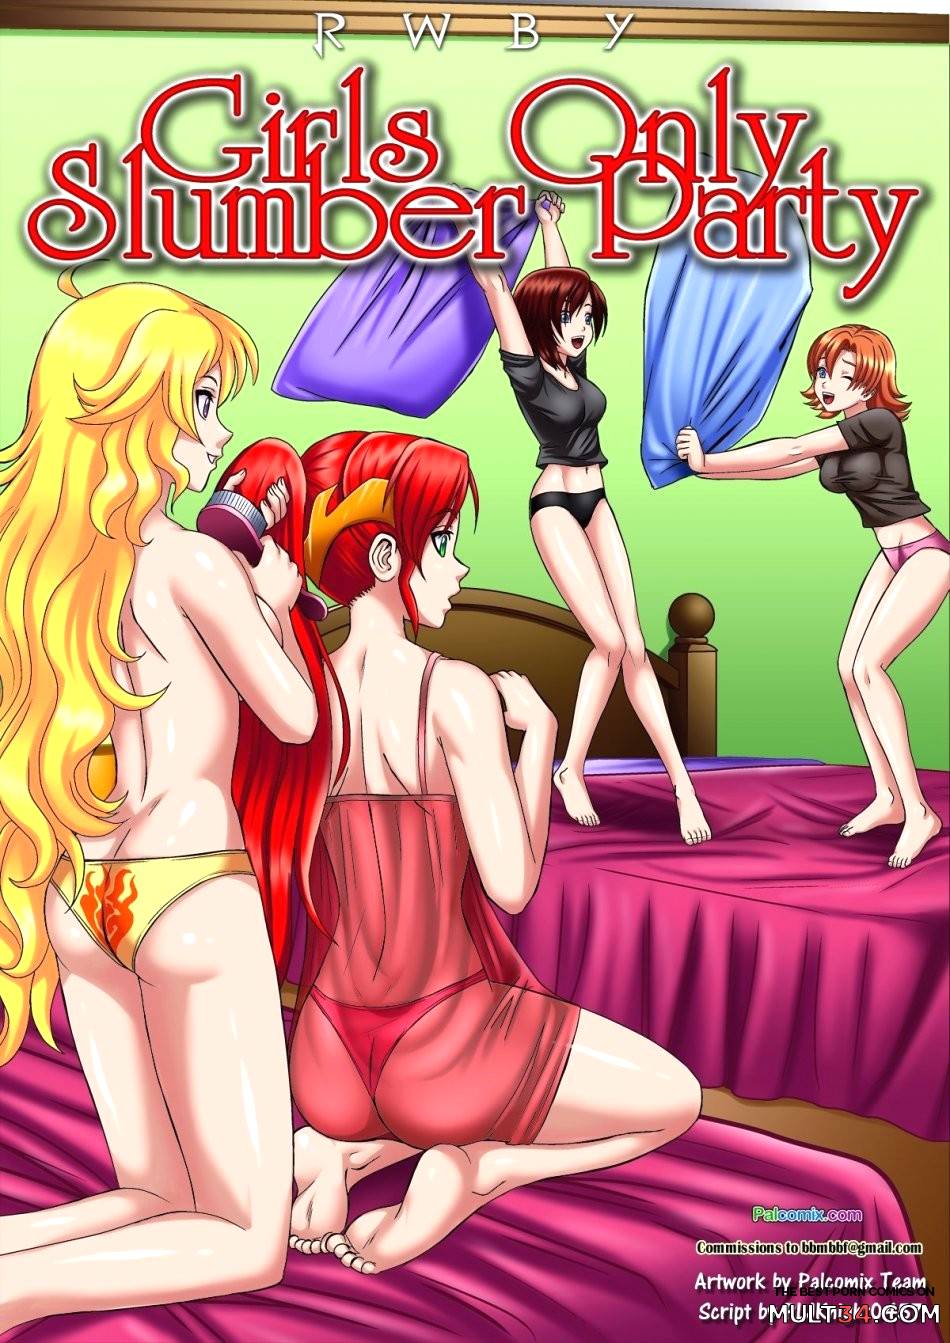 Girls only slumber party porn comic - the best cartoon porn comics, Rule 34  | MULT34